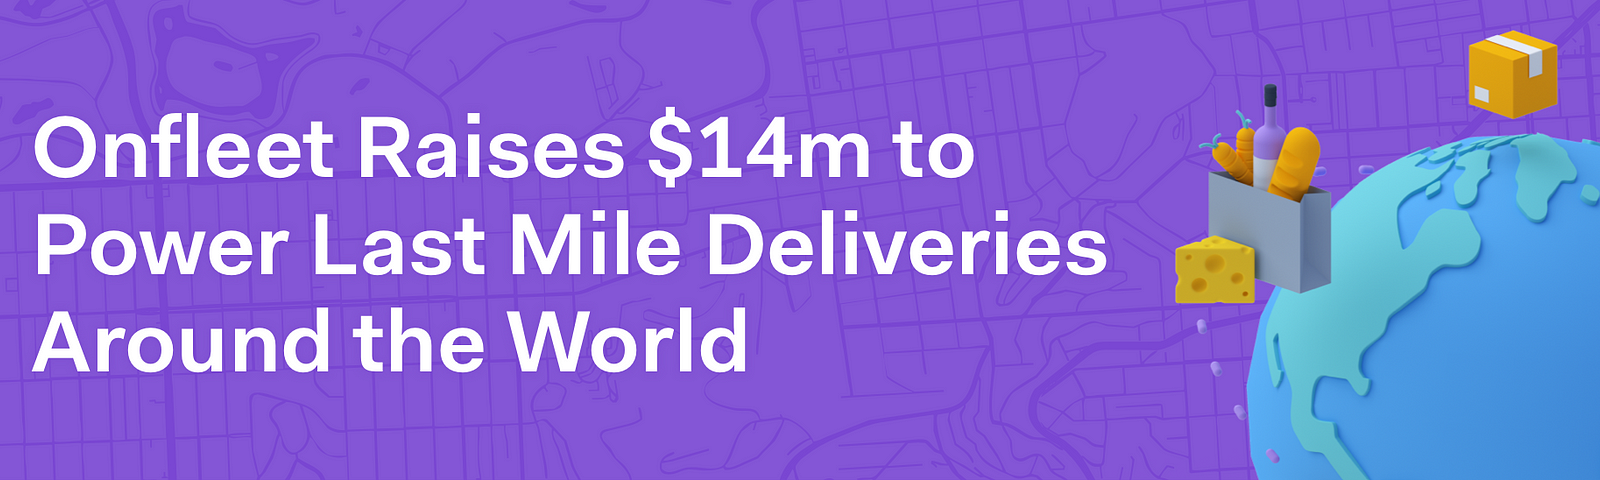 Onfleet提高$ 14百万权力最后一英里交付，为世界各地的零售商